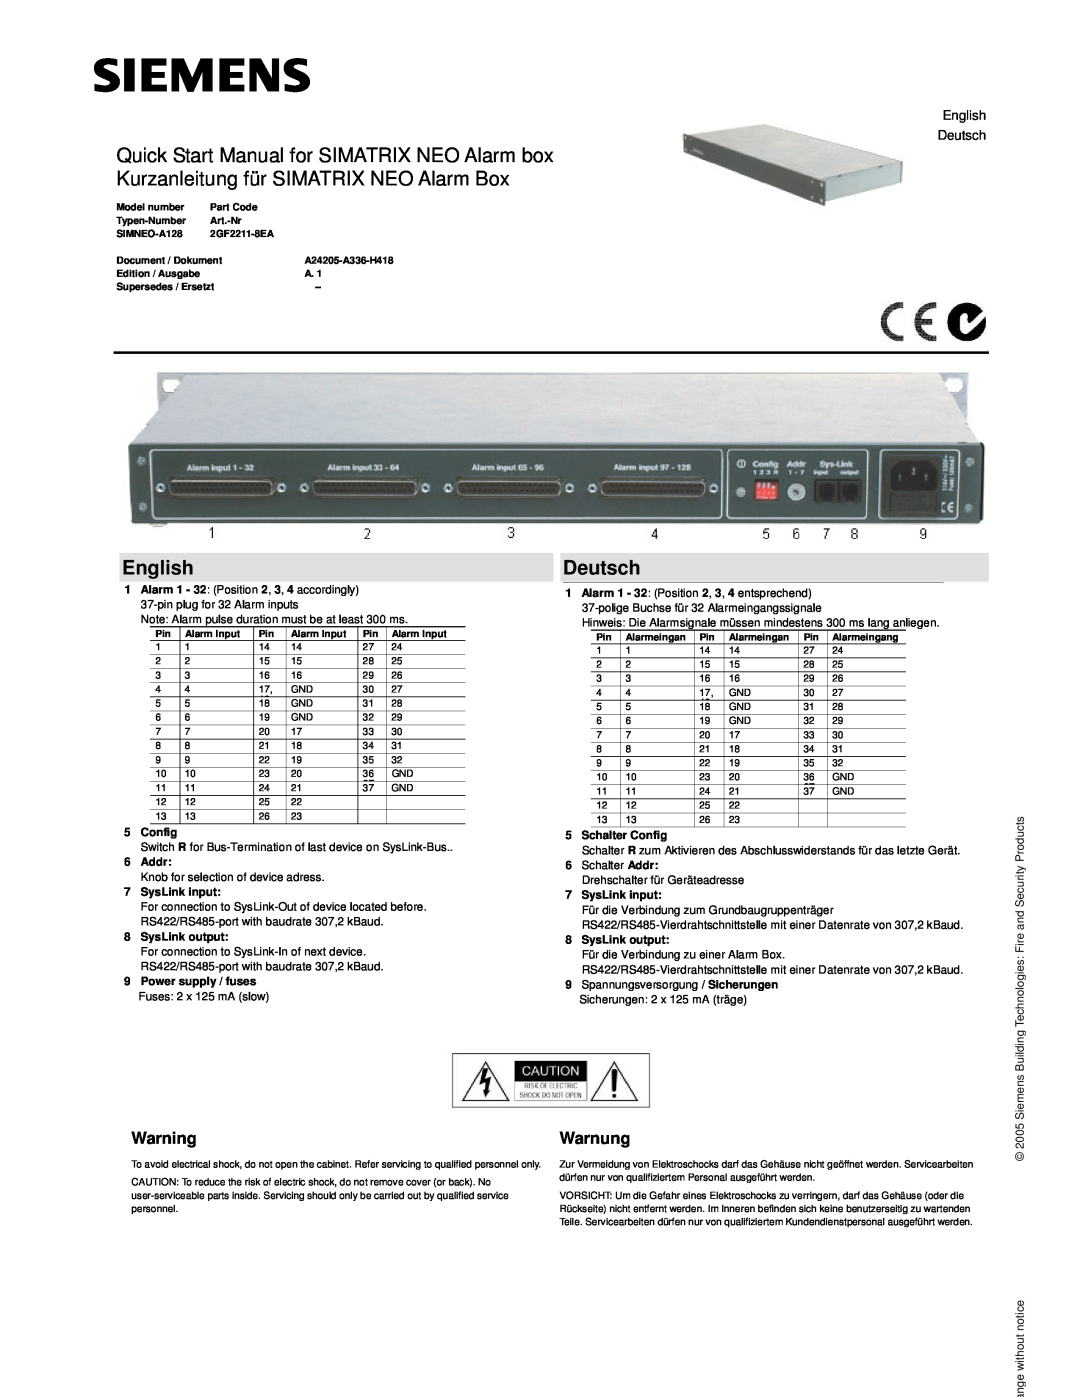 Siemens 2GF2211-8EA quick start manual Warnung, English Deutsch, Config, Addr, SysLink input, 8SysLink output 